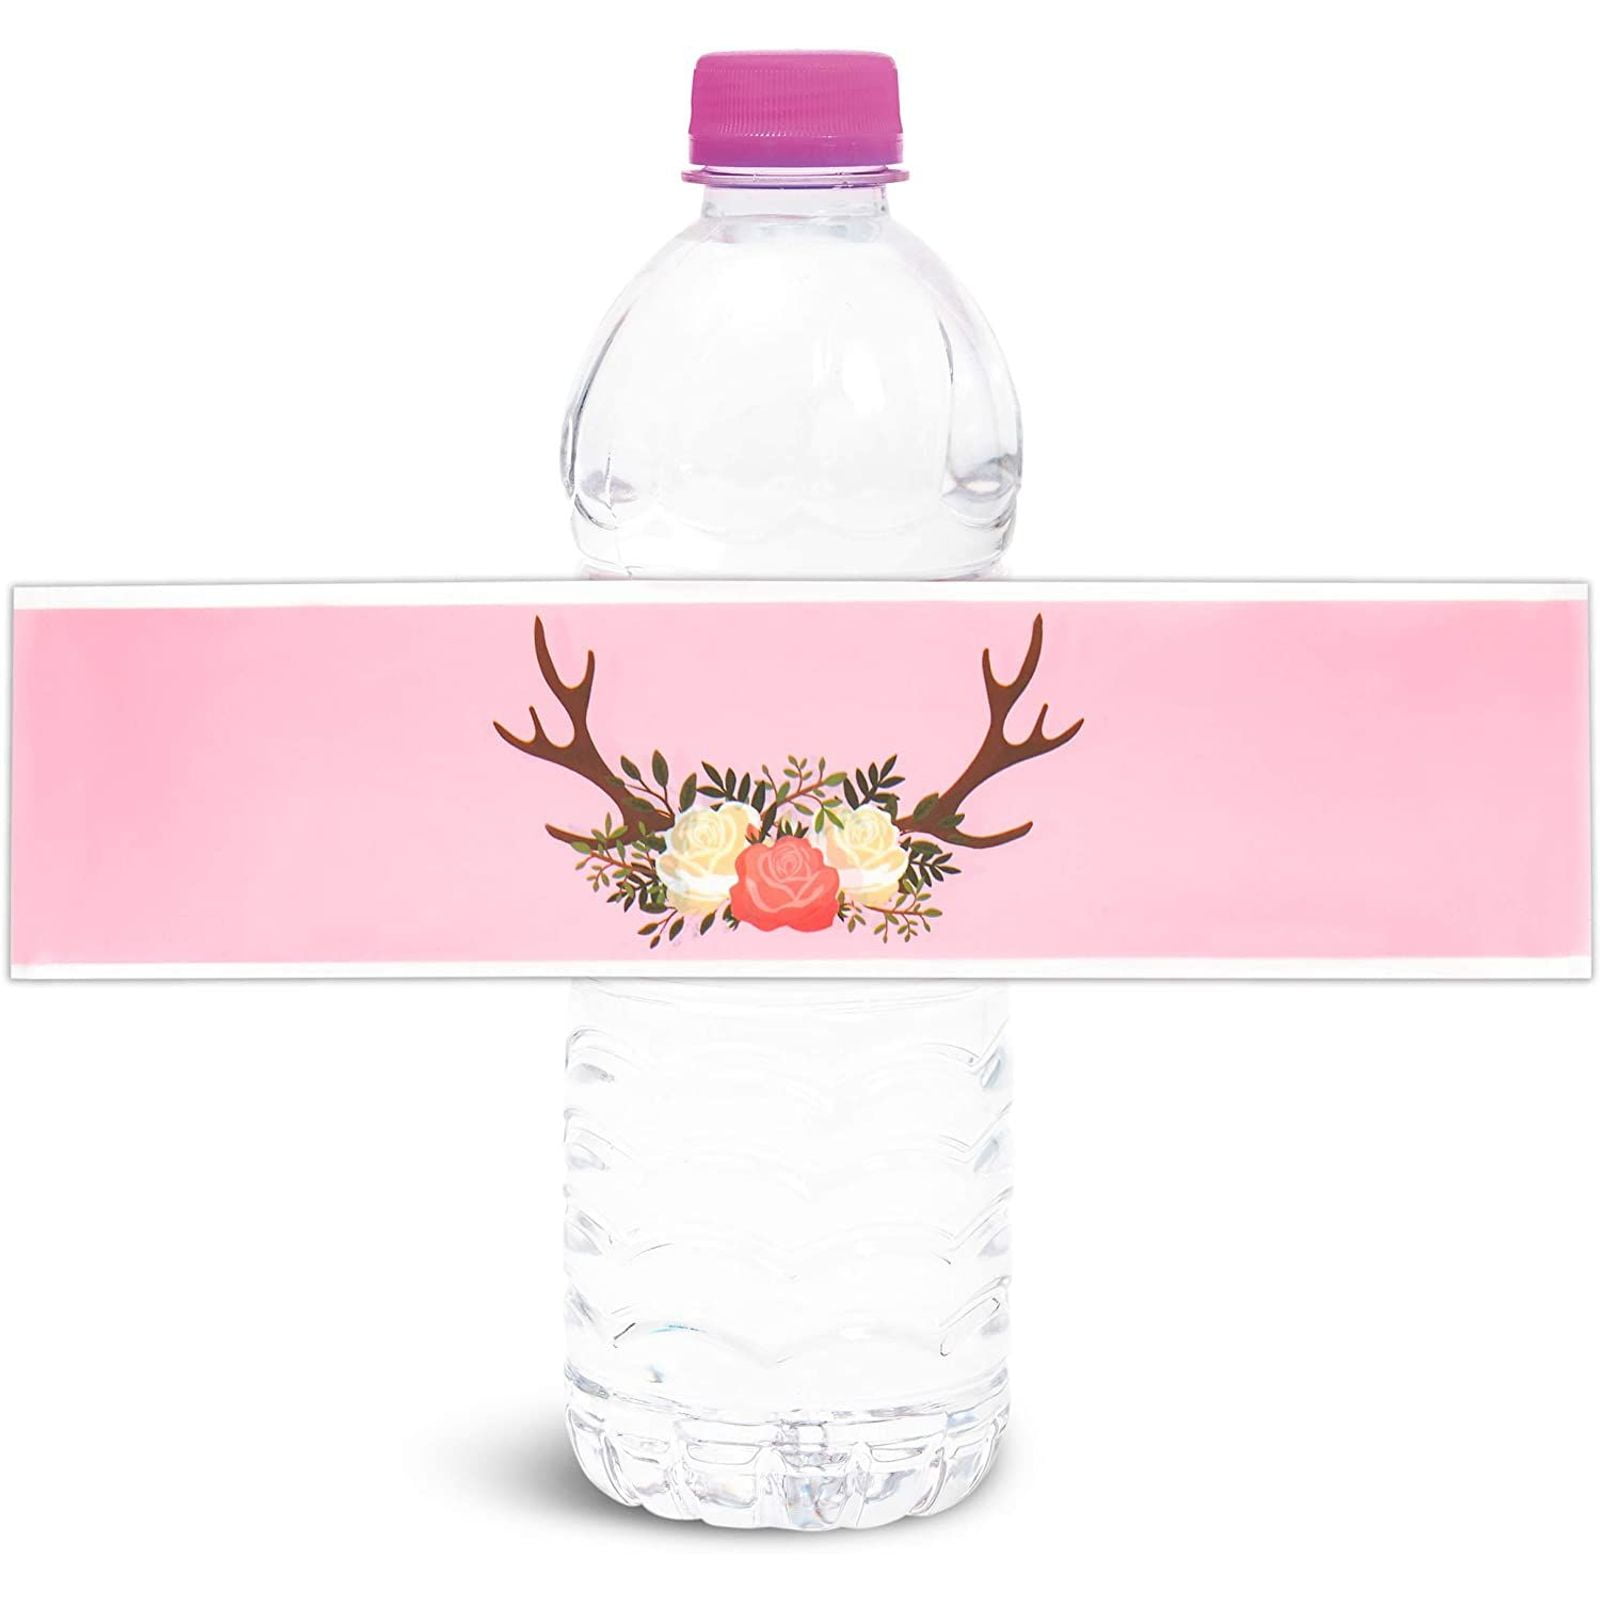 Cute Pink baby Girl Footprints Baby Shower Water Bottle Label, Zazzle